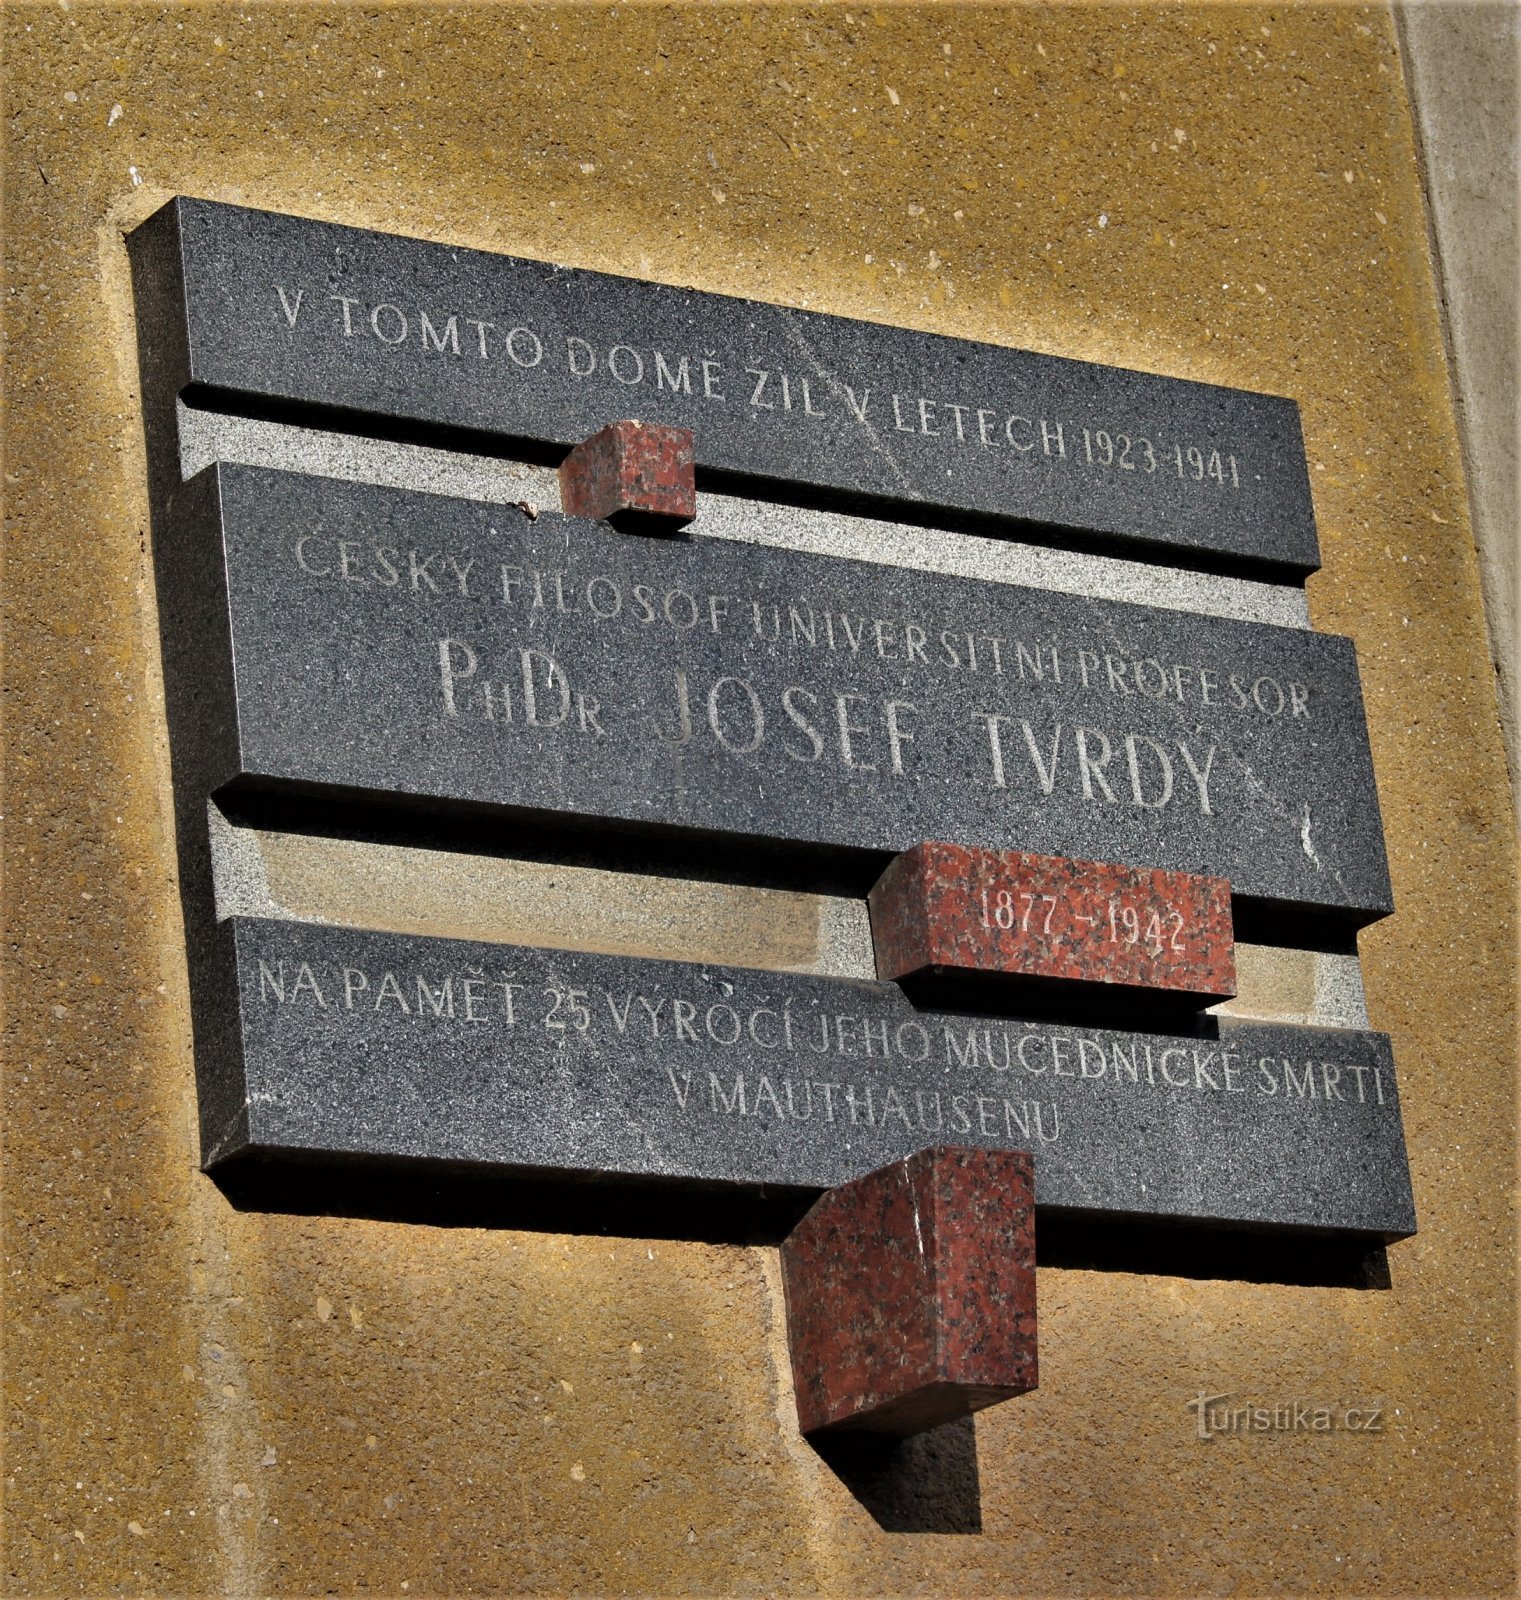 Tấm bia tưởng niệm Brno - Josef Tvrdy